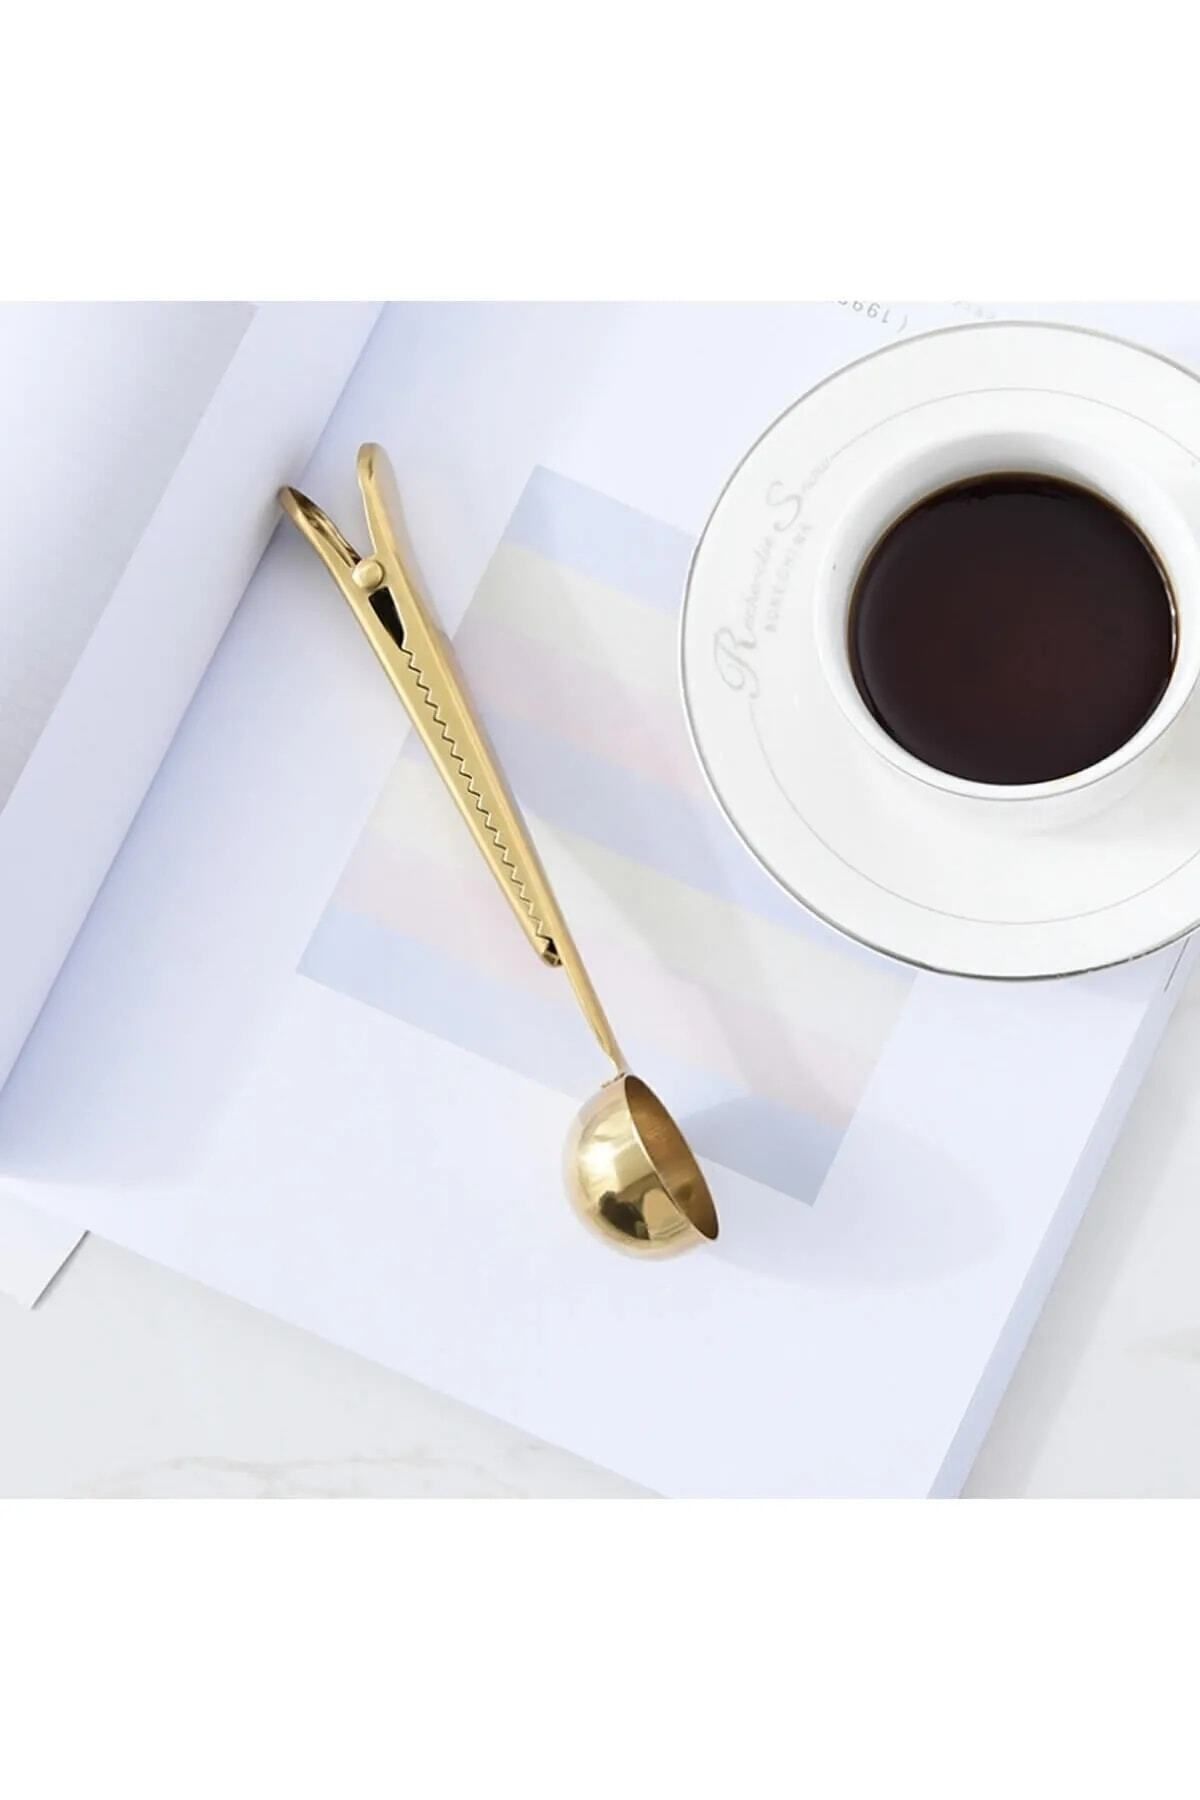 Miniminti Gold Kahve Ölçü Kaşığı - Paket Klipsi